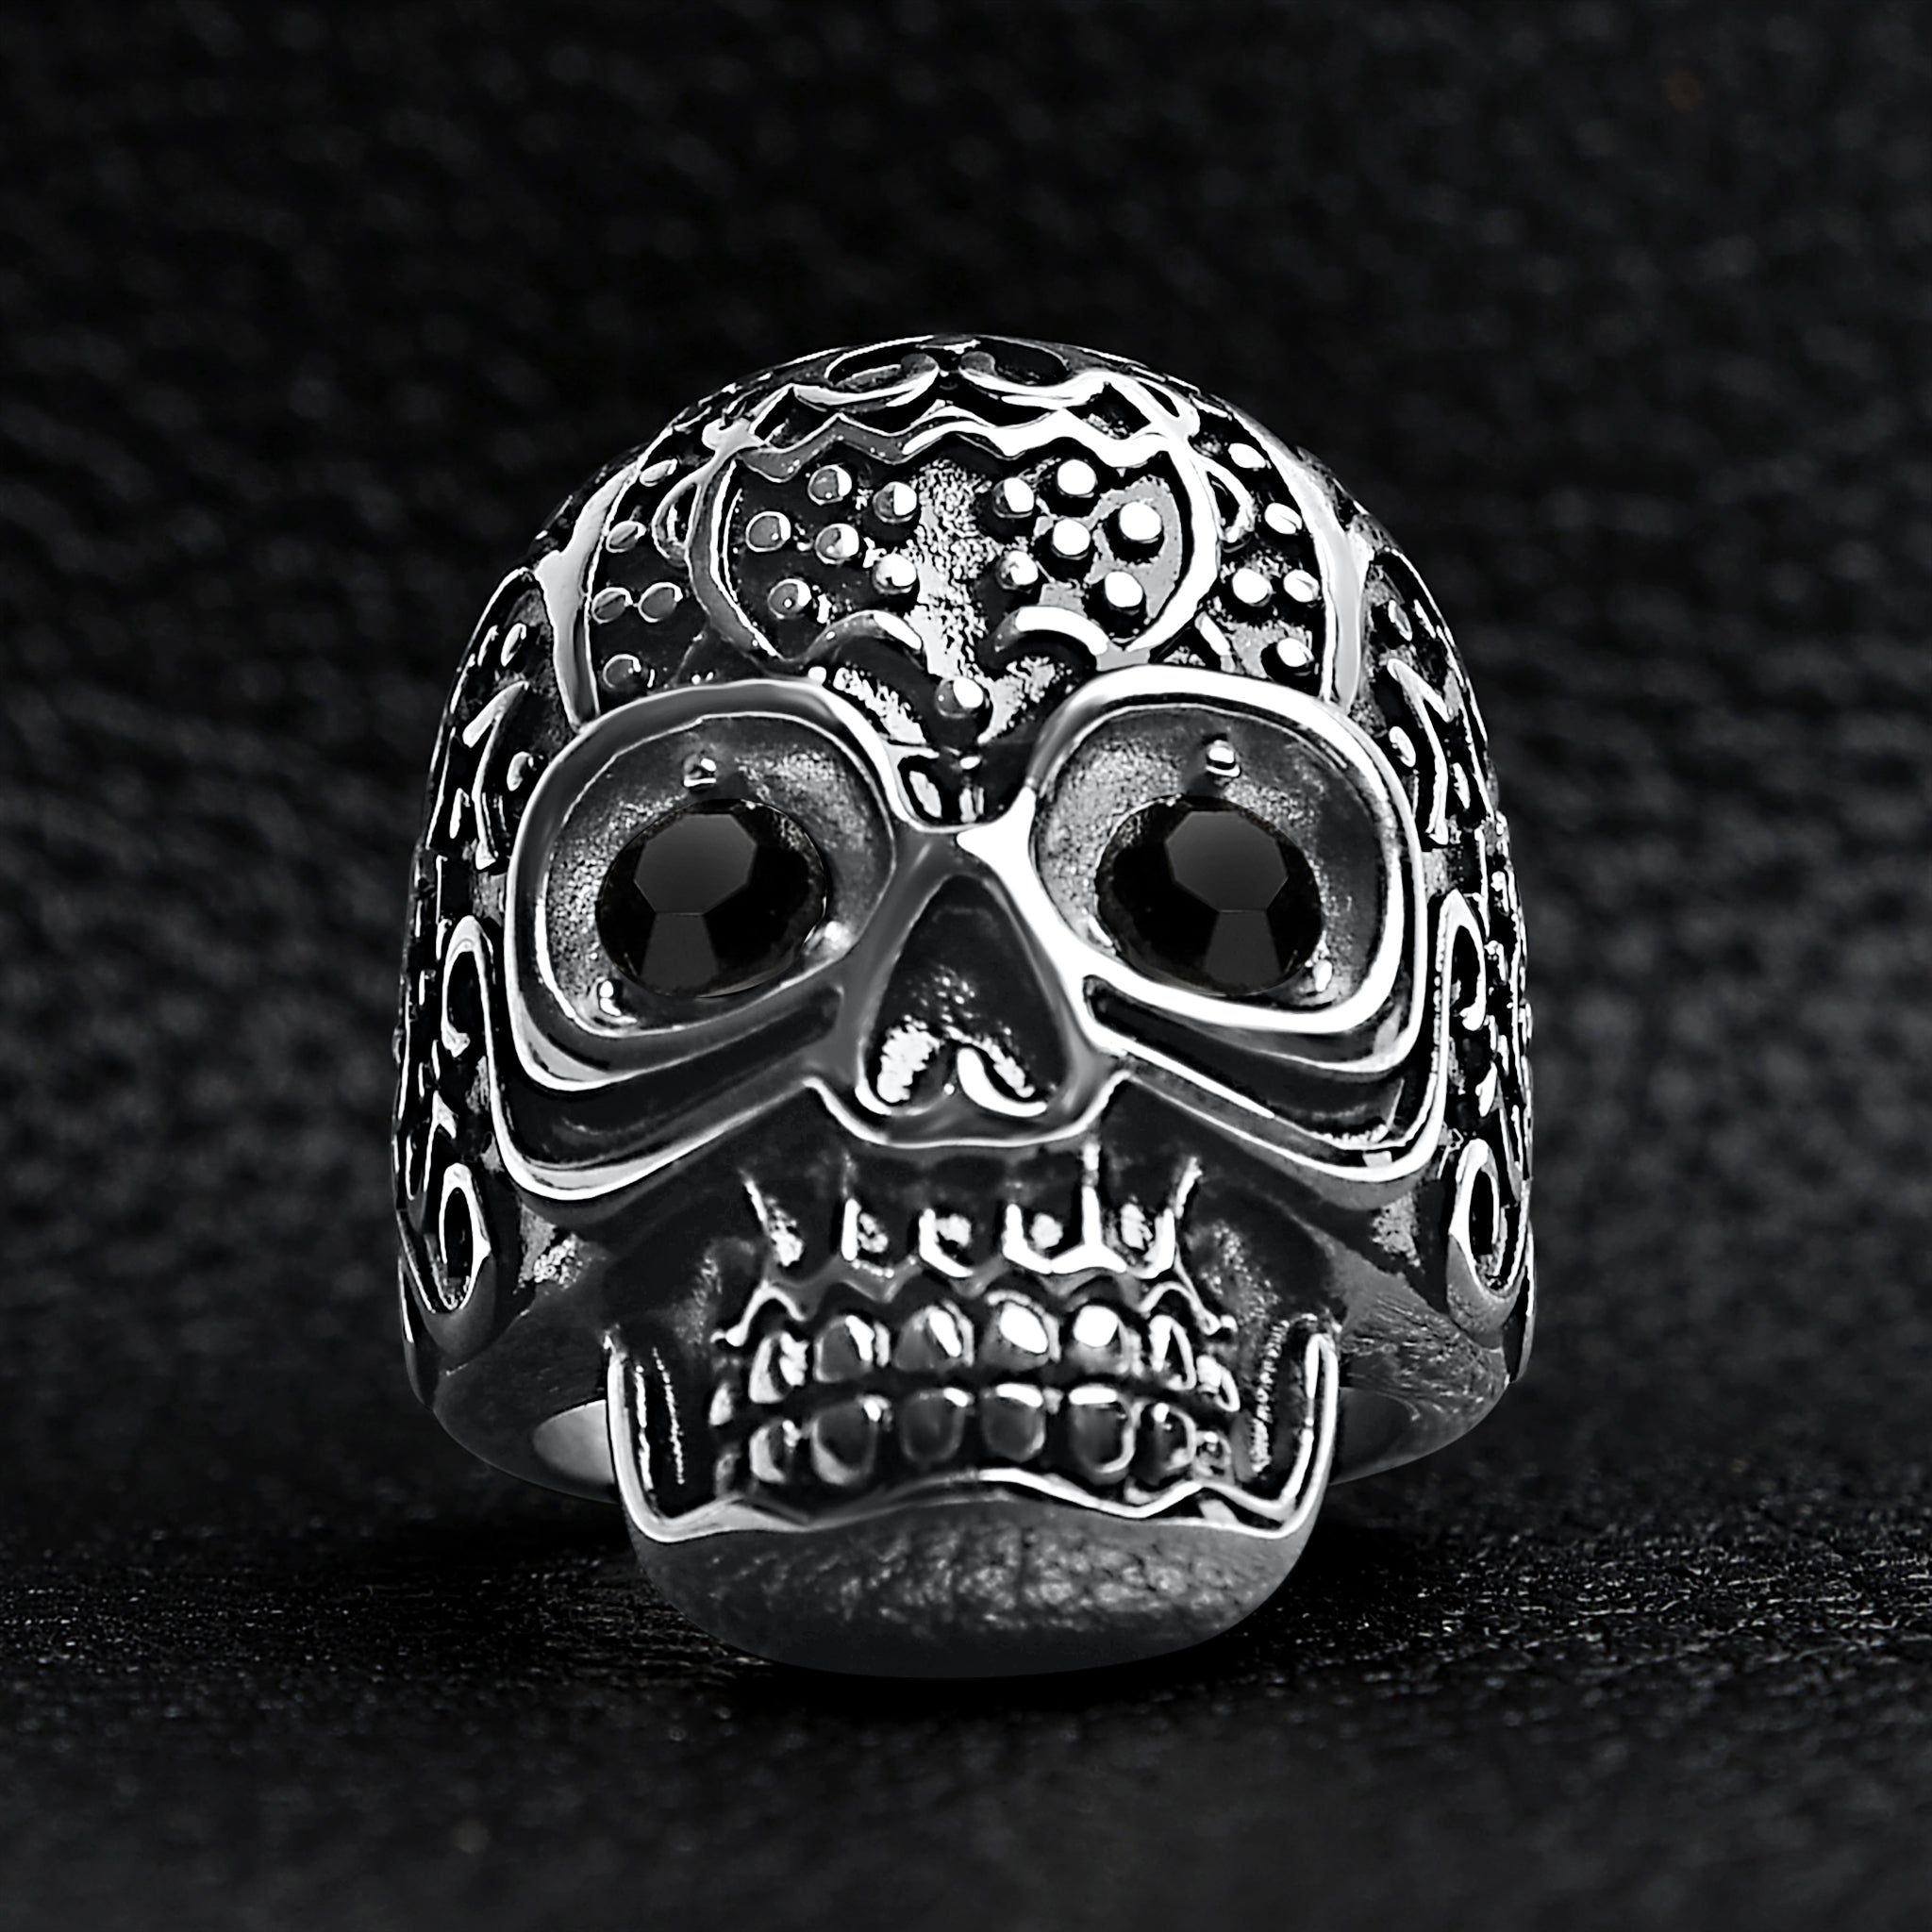 Black CZ Detailed Skull Stainless Steel Ring - Edgy Biker/Goth Accessory Bijou Her